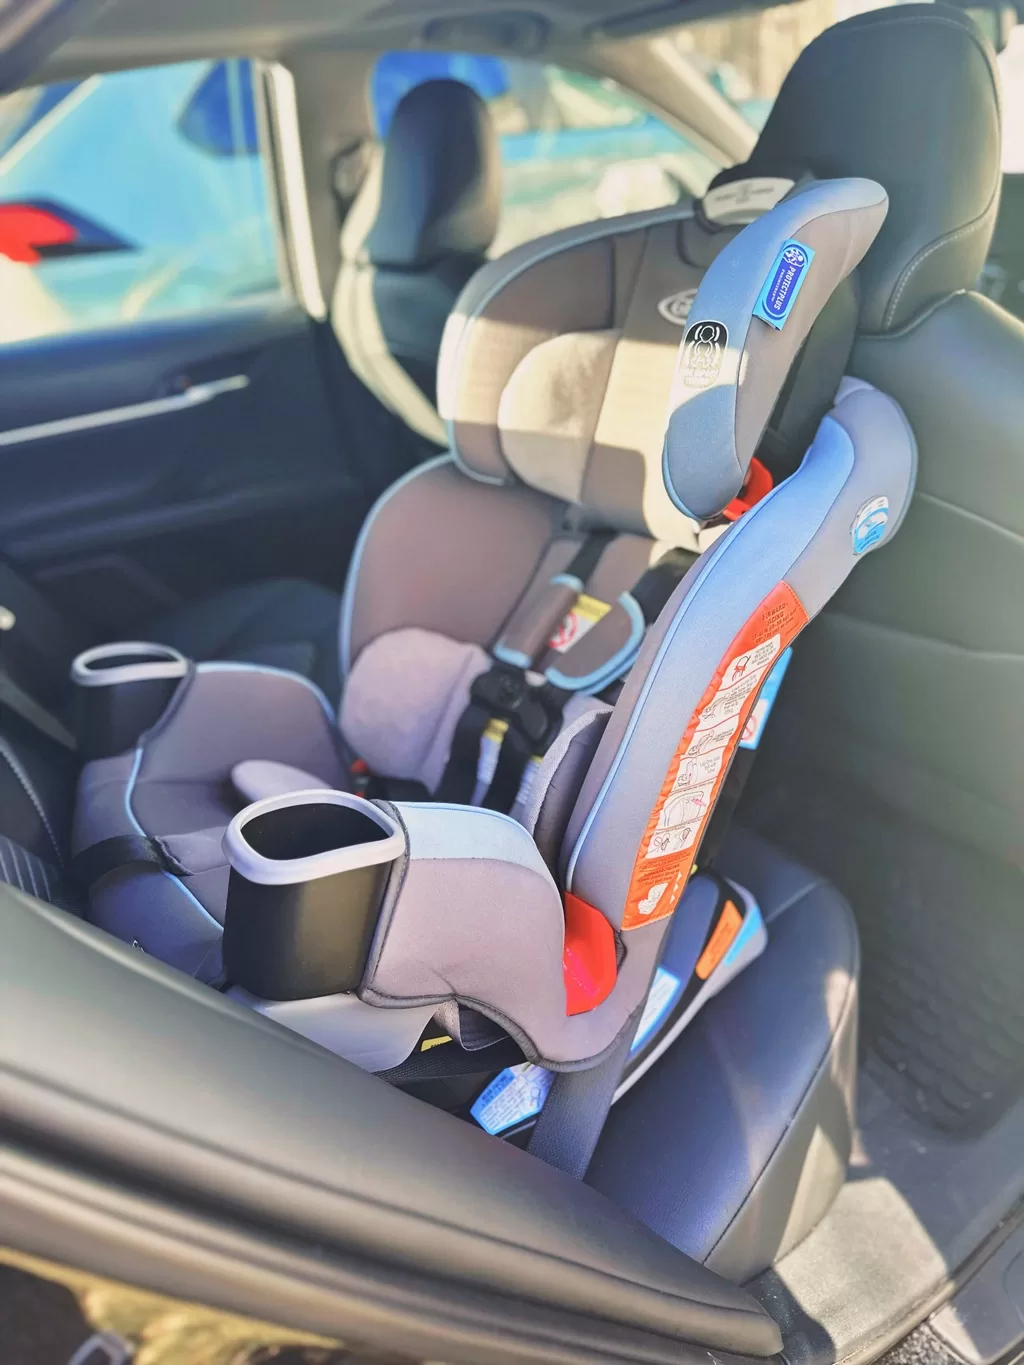 graco car seat inside a car